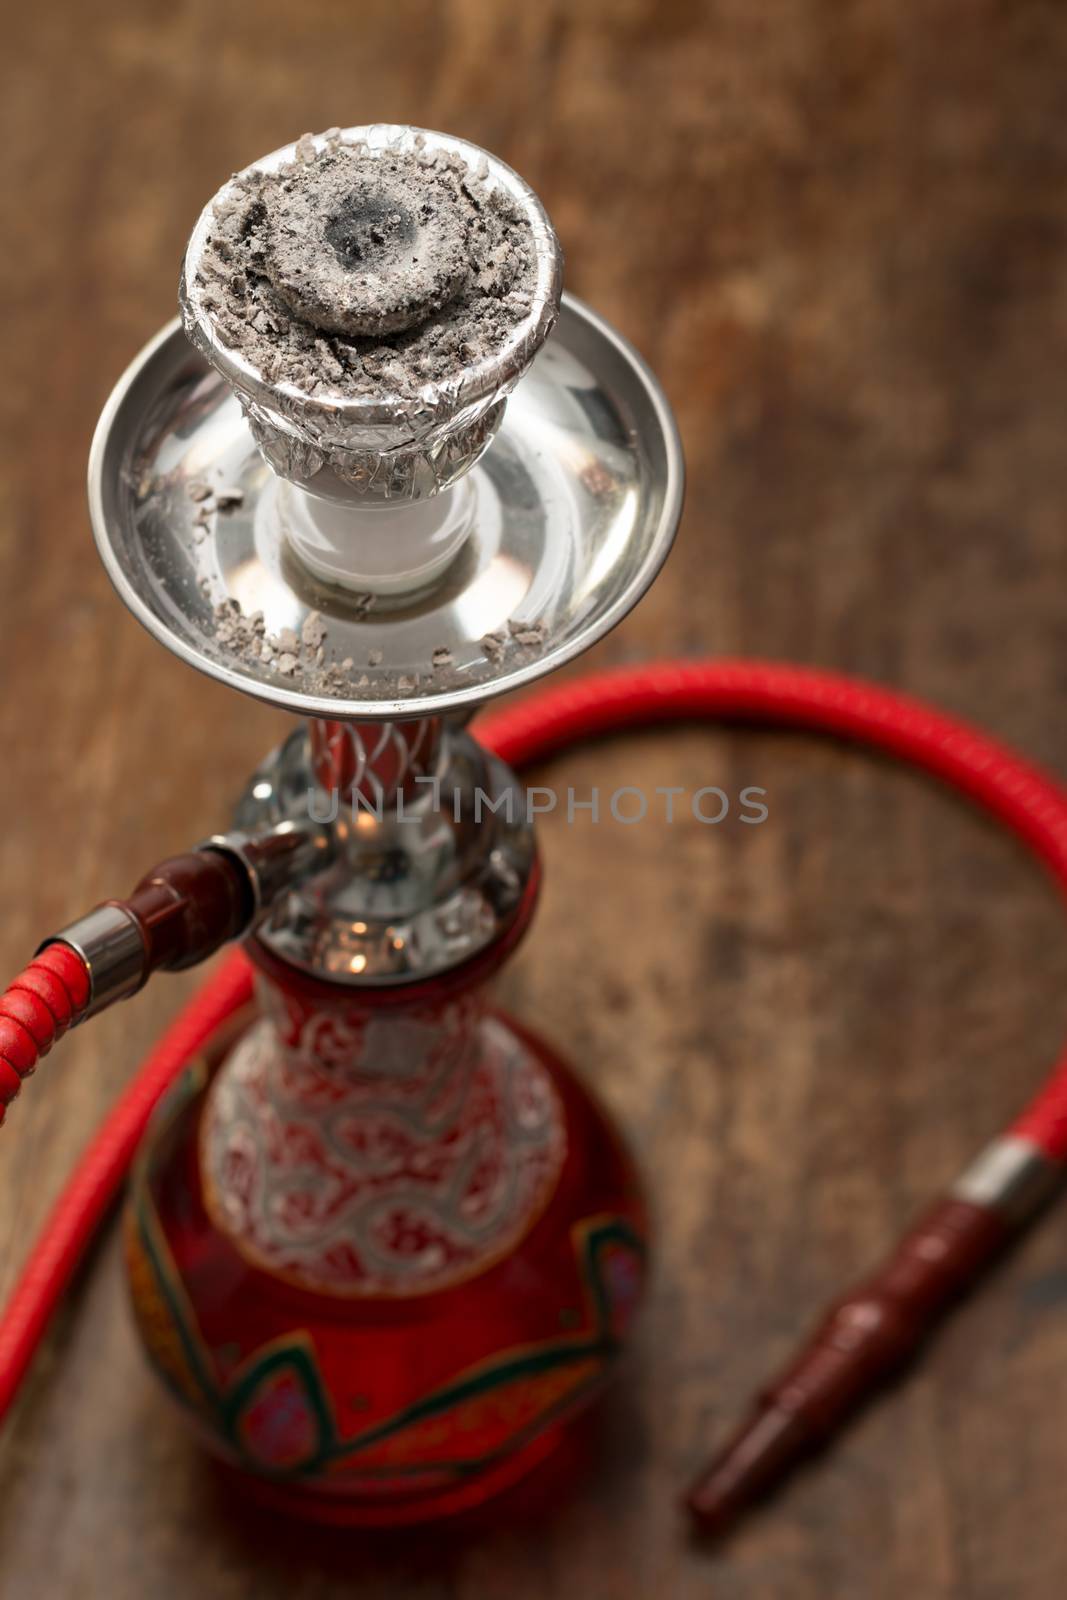 An ornate Syrian sheesha or hooka water pipe on wood table